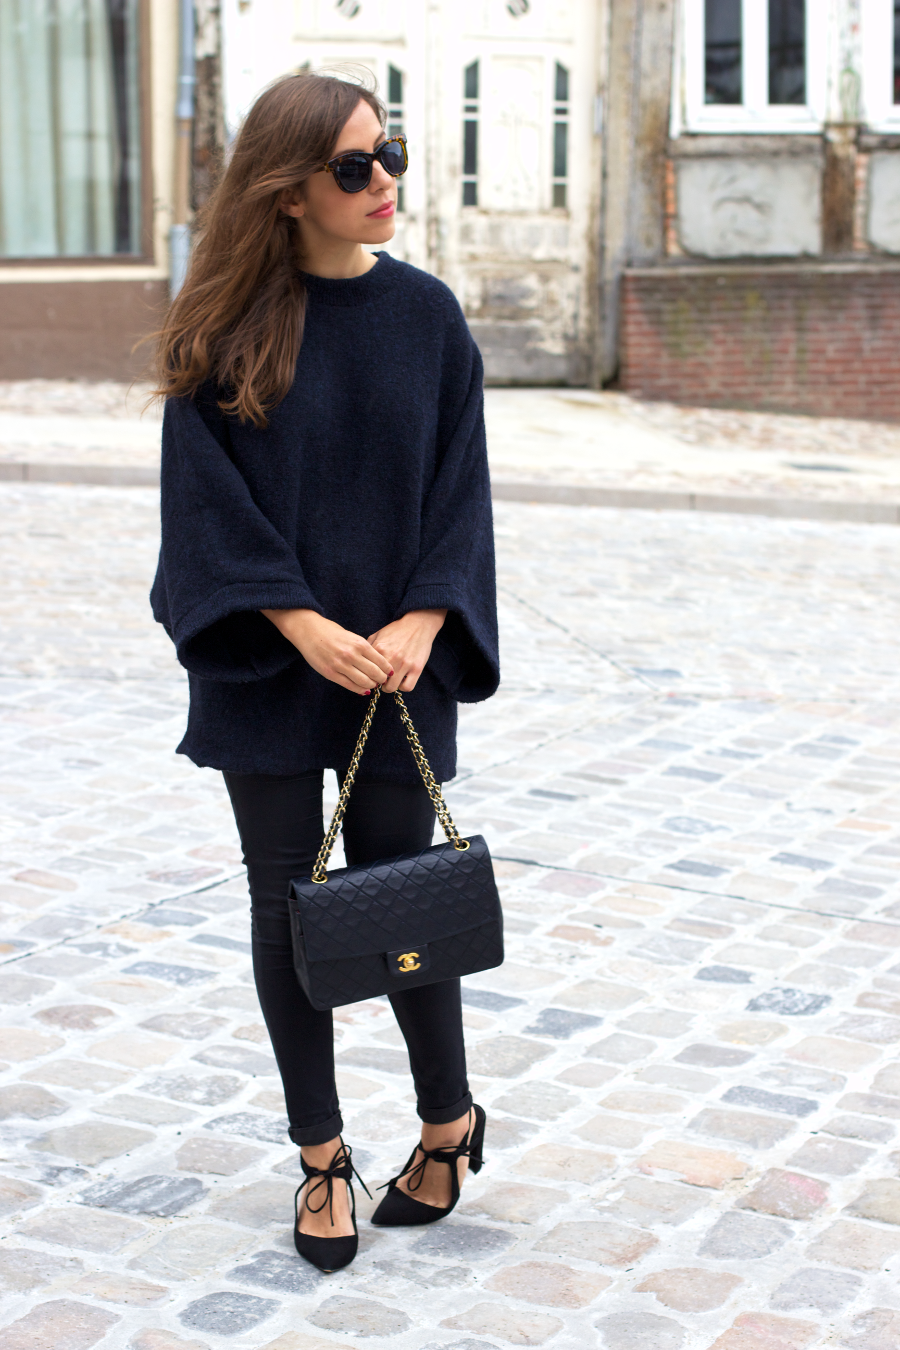 Black Blue Outfit Chanel Bag